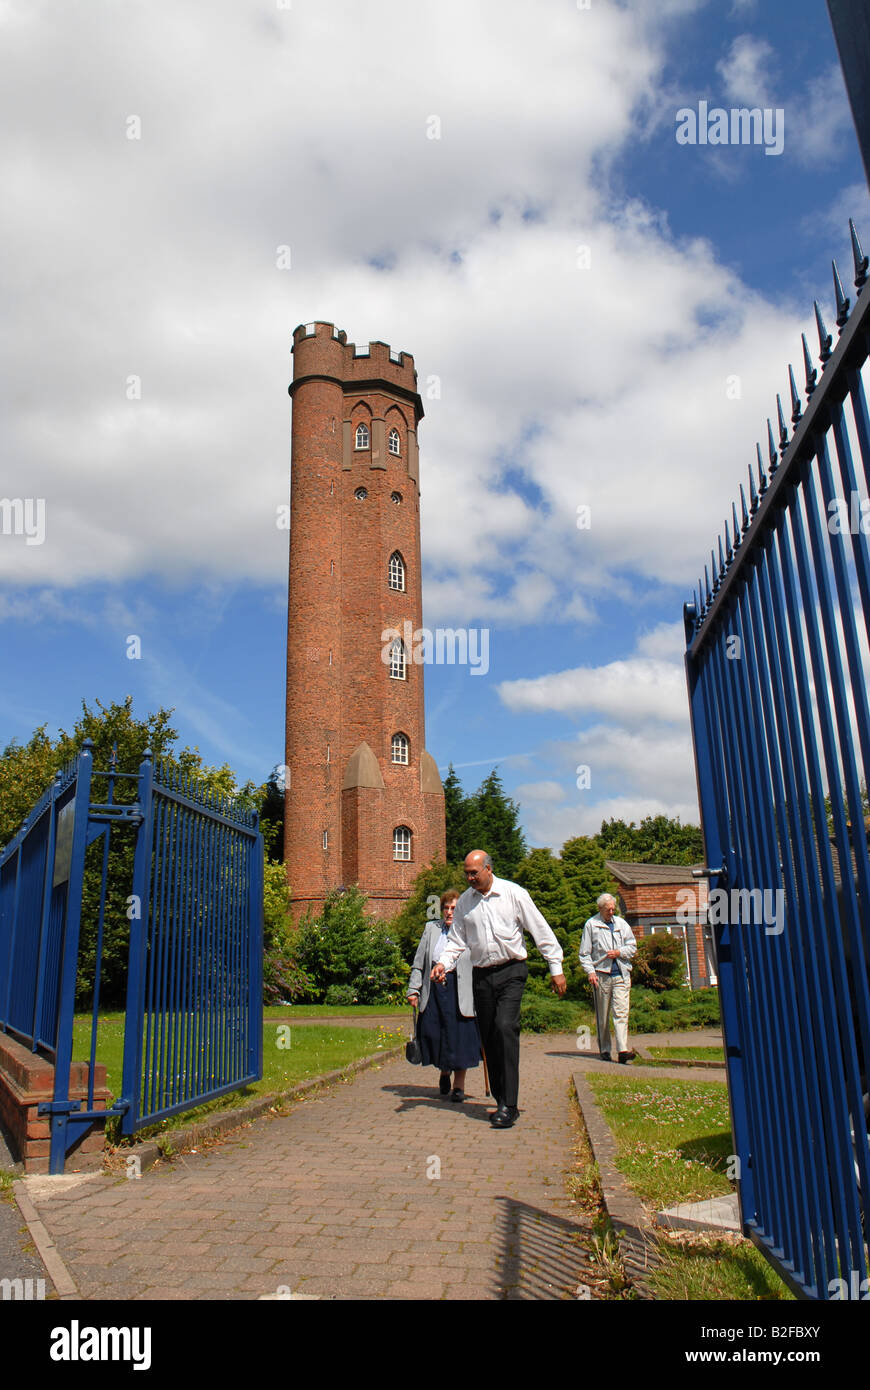 The Perrott s Folly tower in Edgbaston Birmingham Stock Photo